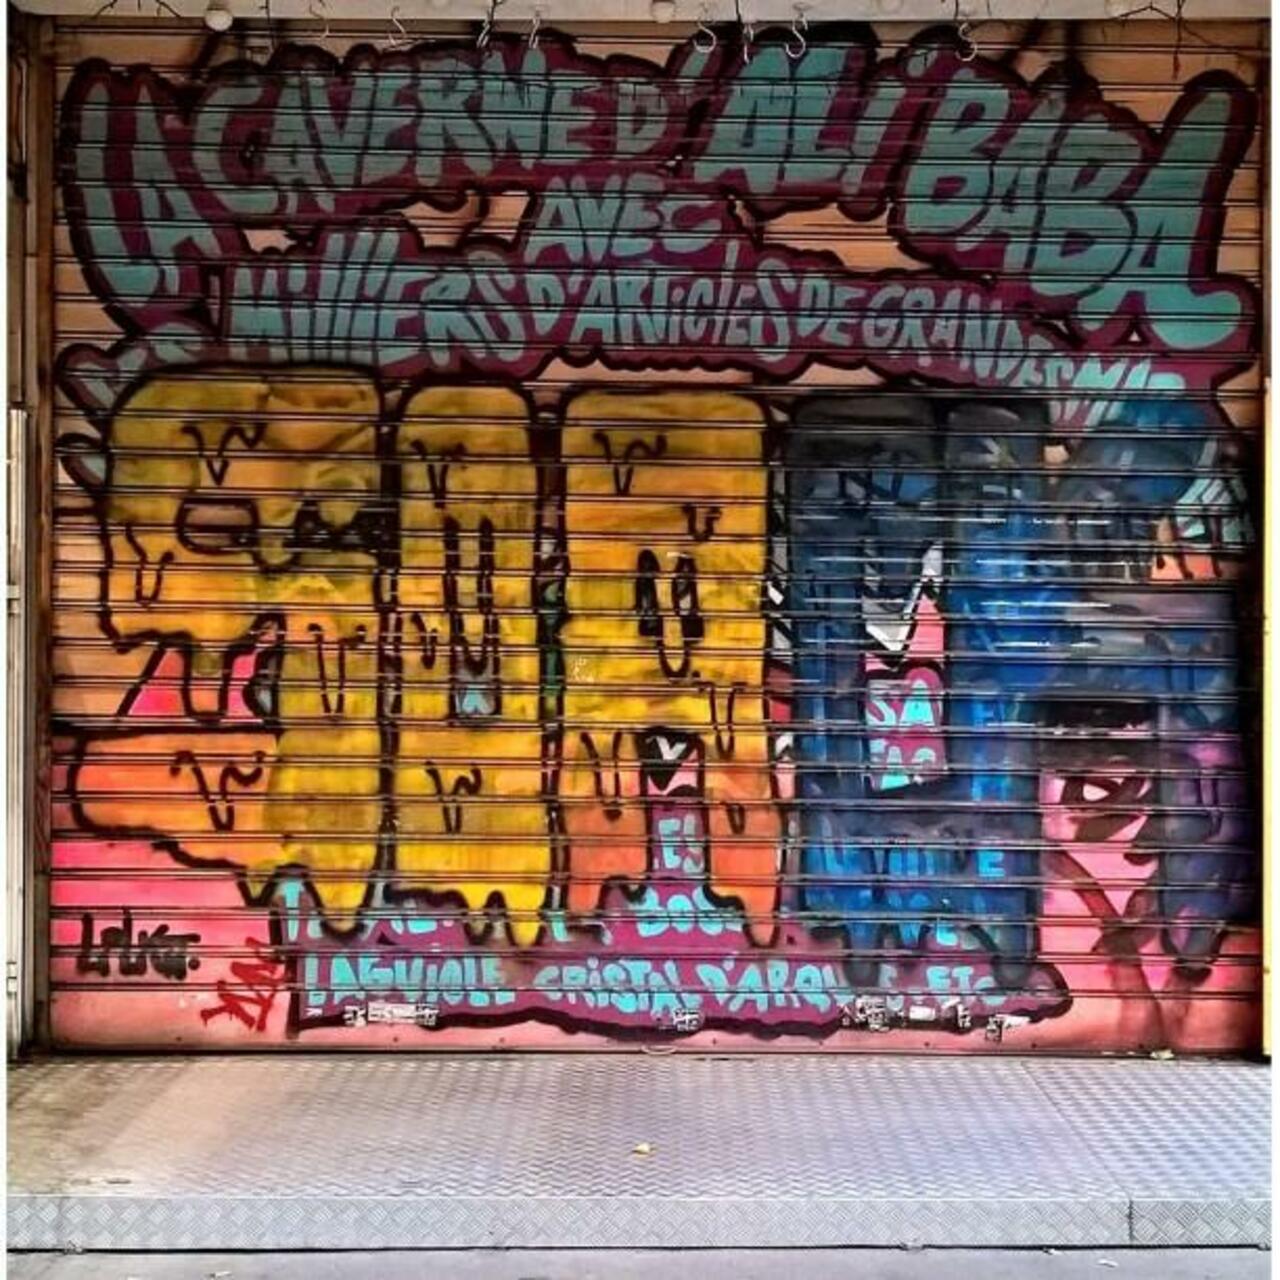 SOACK
#streetart #graffiti #graff #art #fatcap #bombing #sprayart #spraycanart #wallart #handstyle #lettering #urba… http://t.co/lvR9ZAgXLx